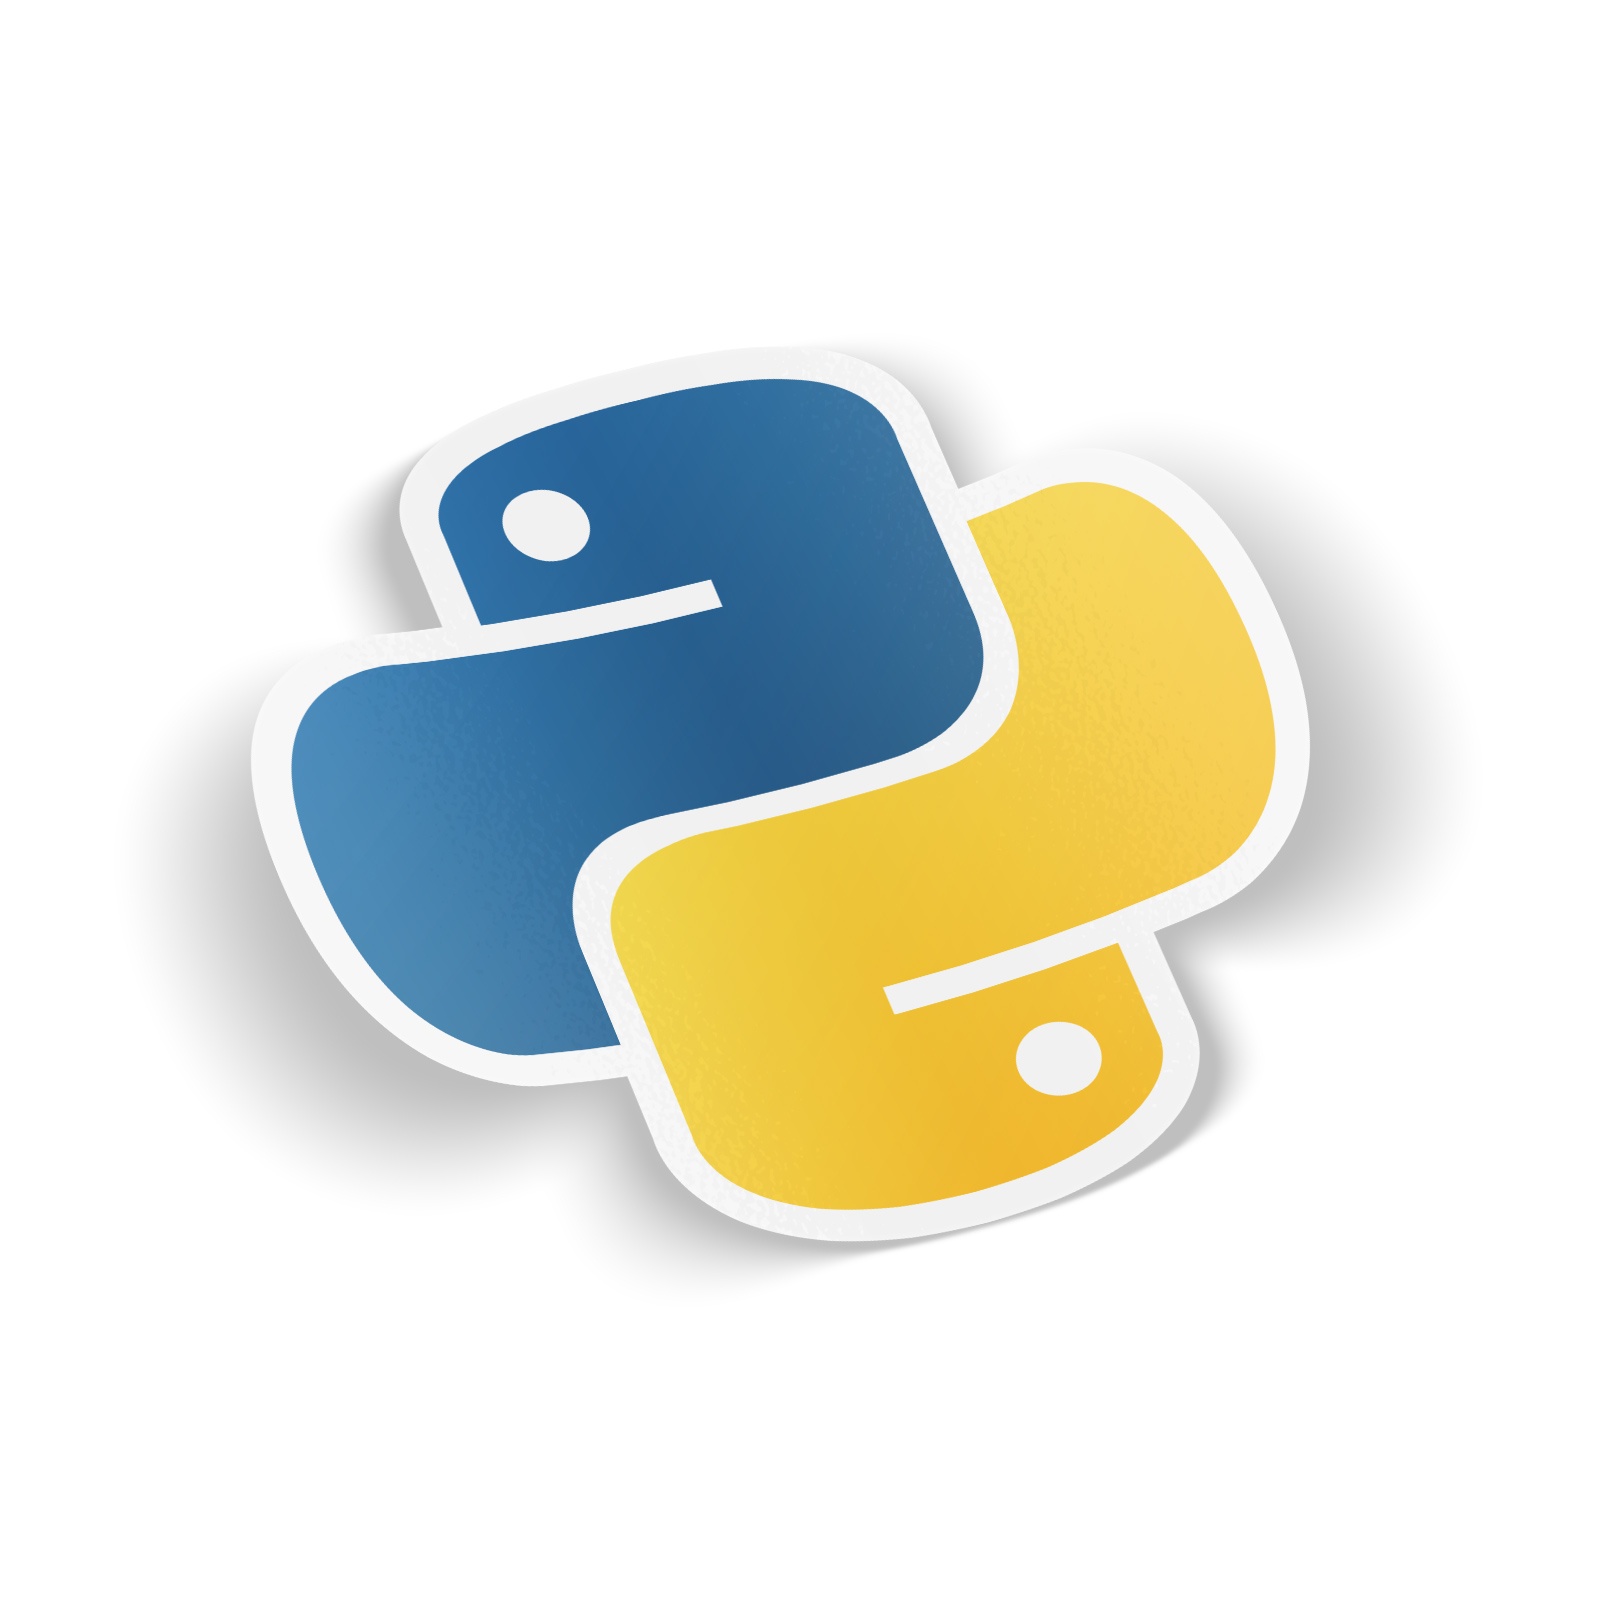 Логотип программирования питон. Значок Python. Python язык программирования лого. Язык програмирония пион логотип. Пайтон язык программирования логотип.